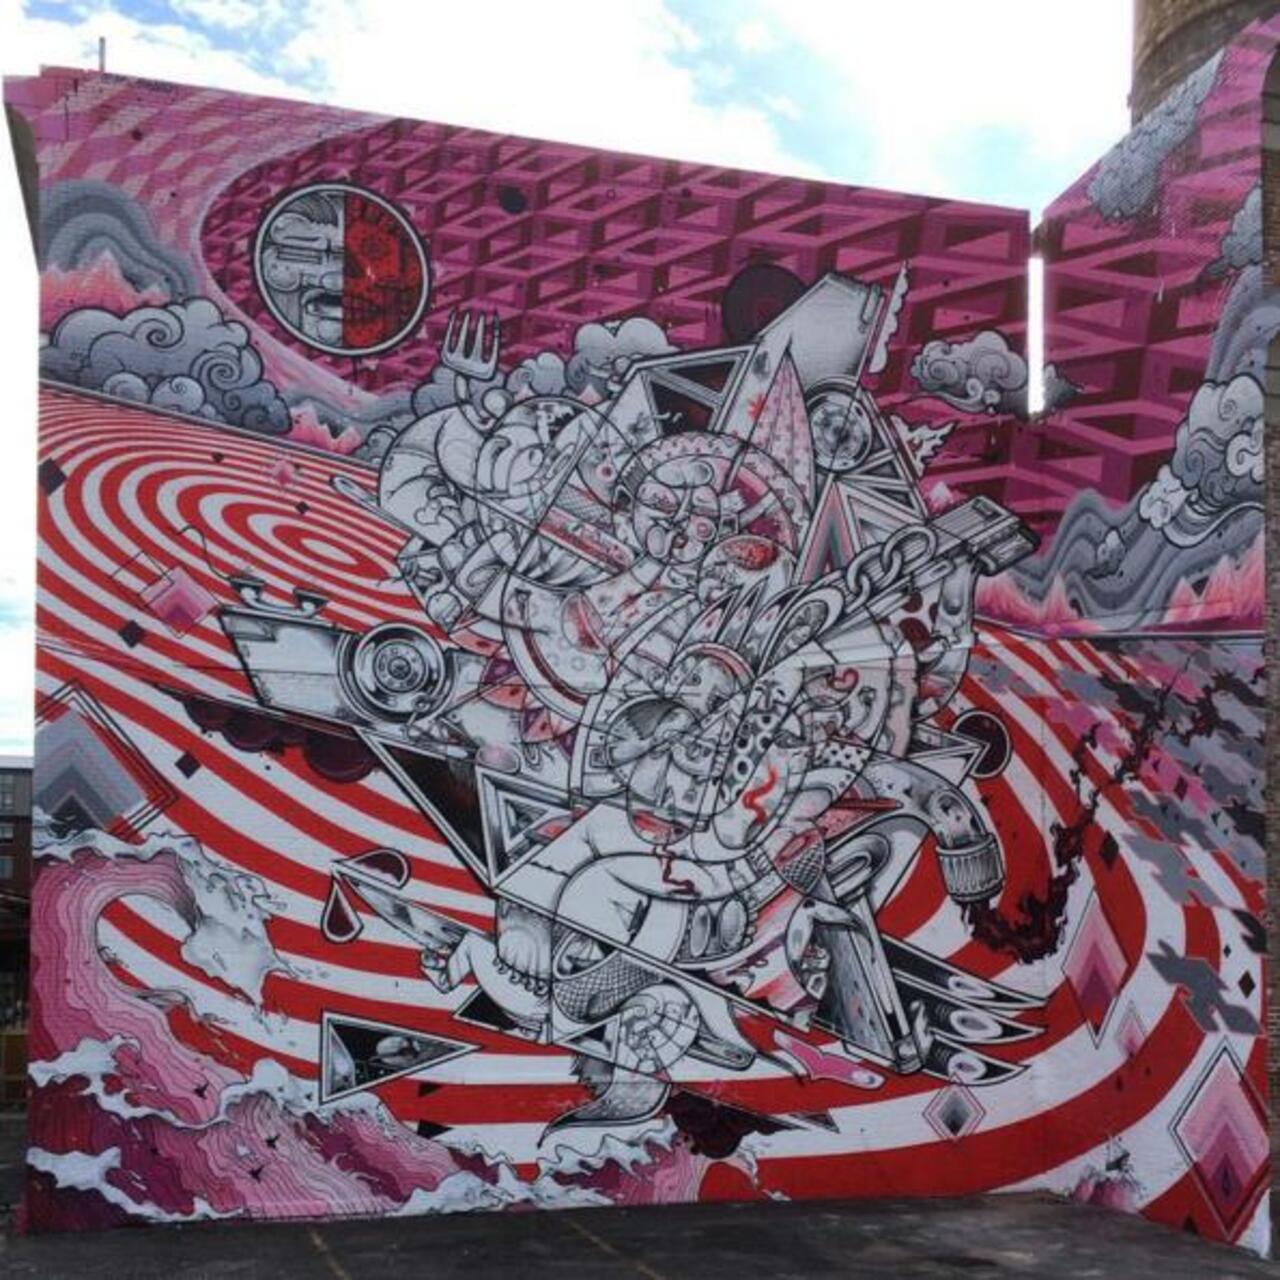 Fantastic new #mural by @hownosm at #manacontemporary in #jerseycity  ( halopigg ) #streetart #urbanart #graffiti http://t.co/Xmeid71Ybi